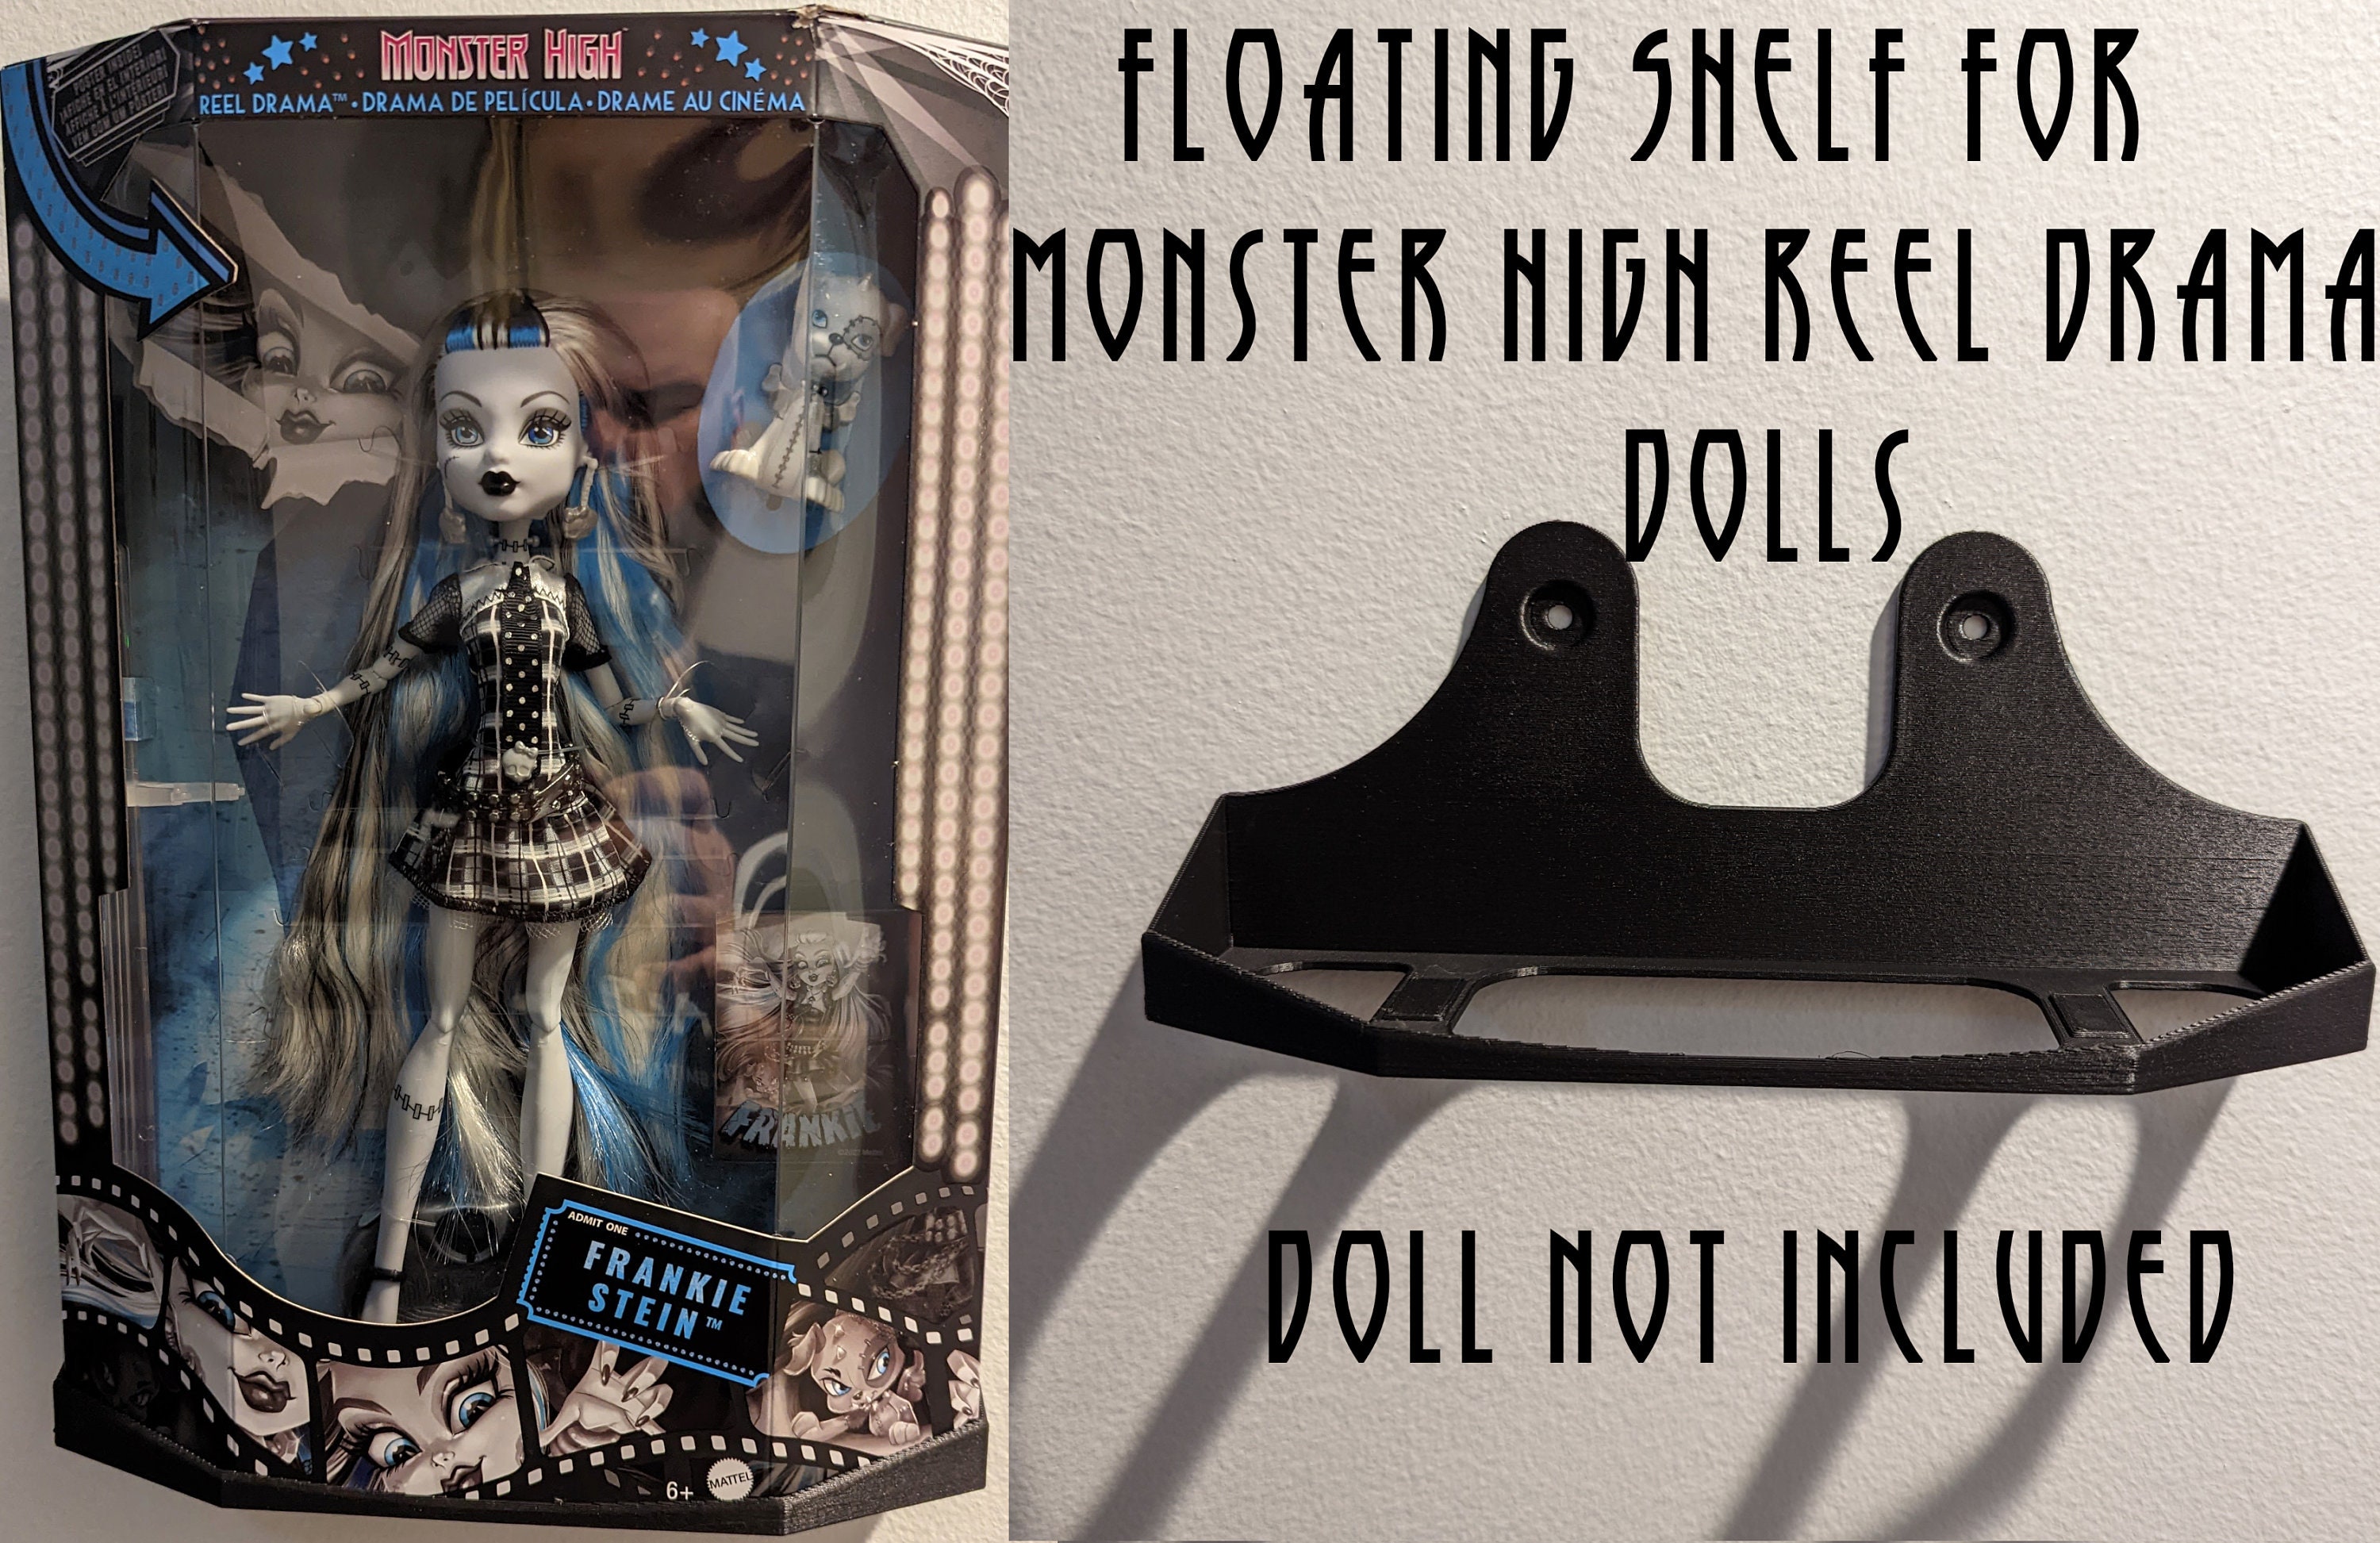 Wall Mount/floating Shelf for Monster High Reel Drama Buy